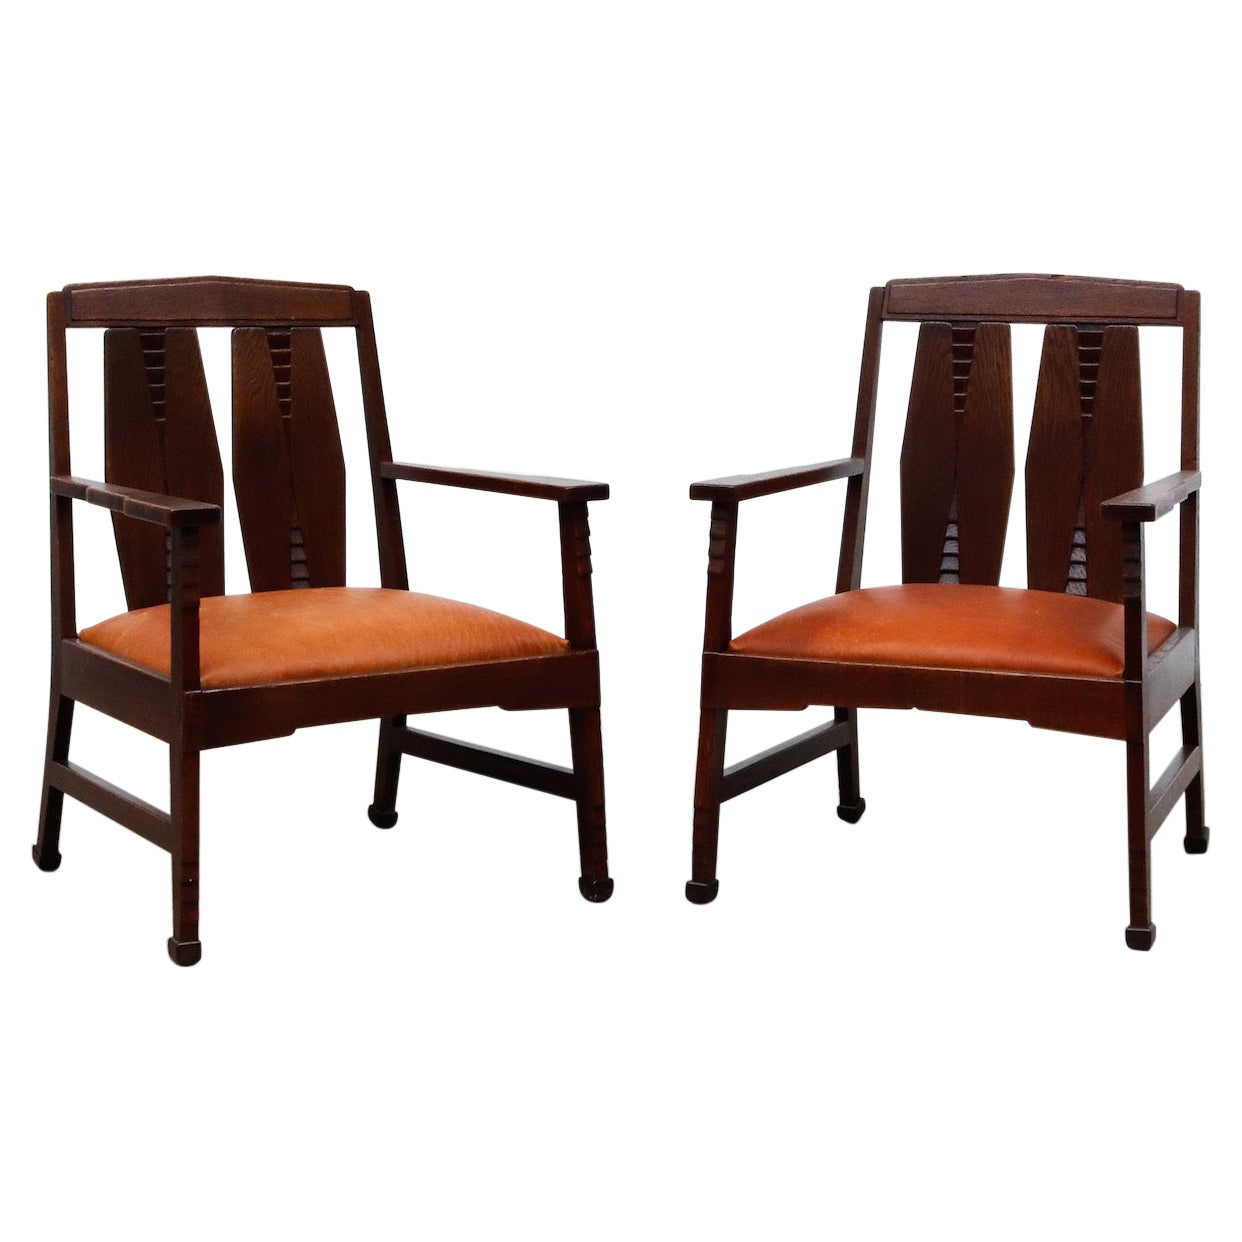 Pair of Art Deco, Amsterdam School Arm Chairs